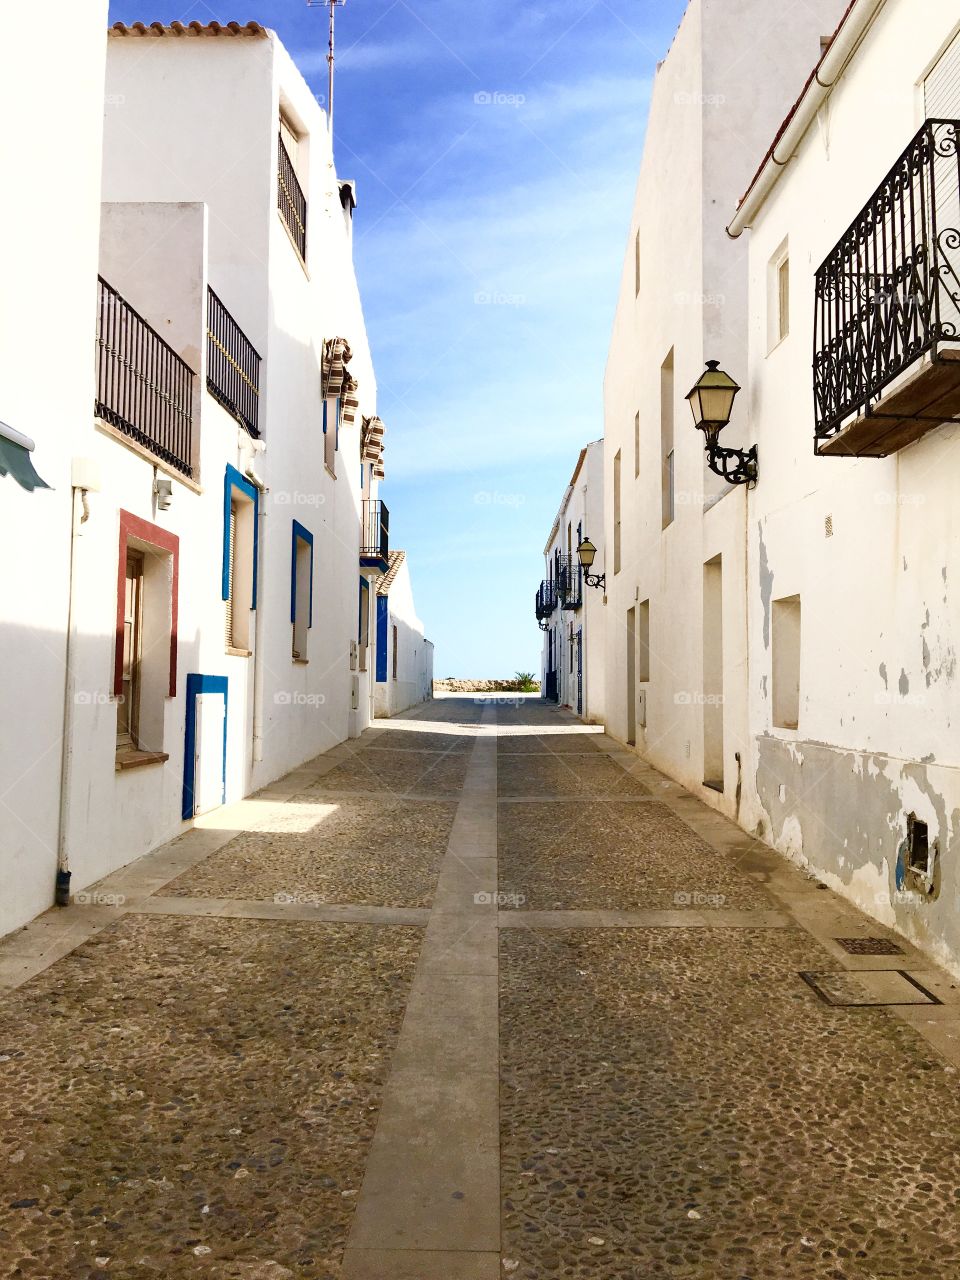 Spanish Alley